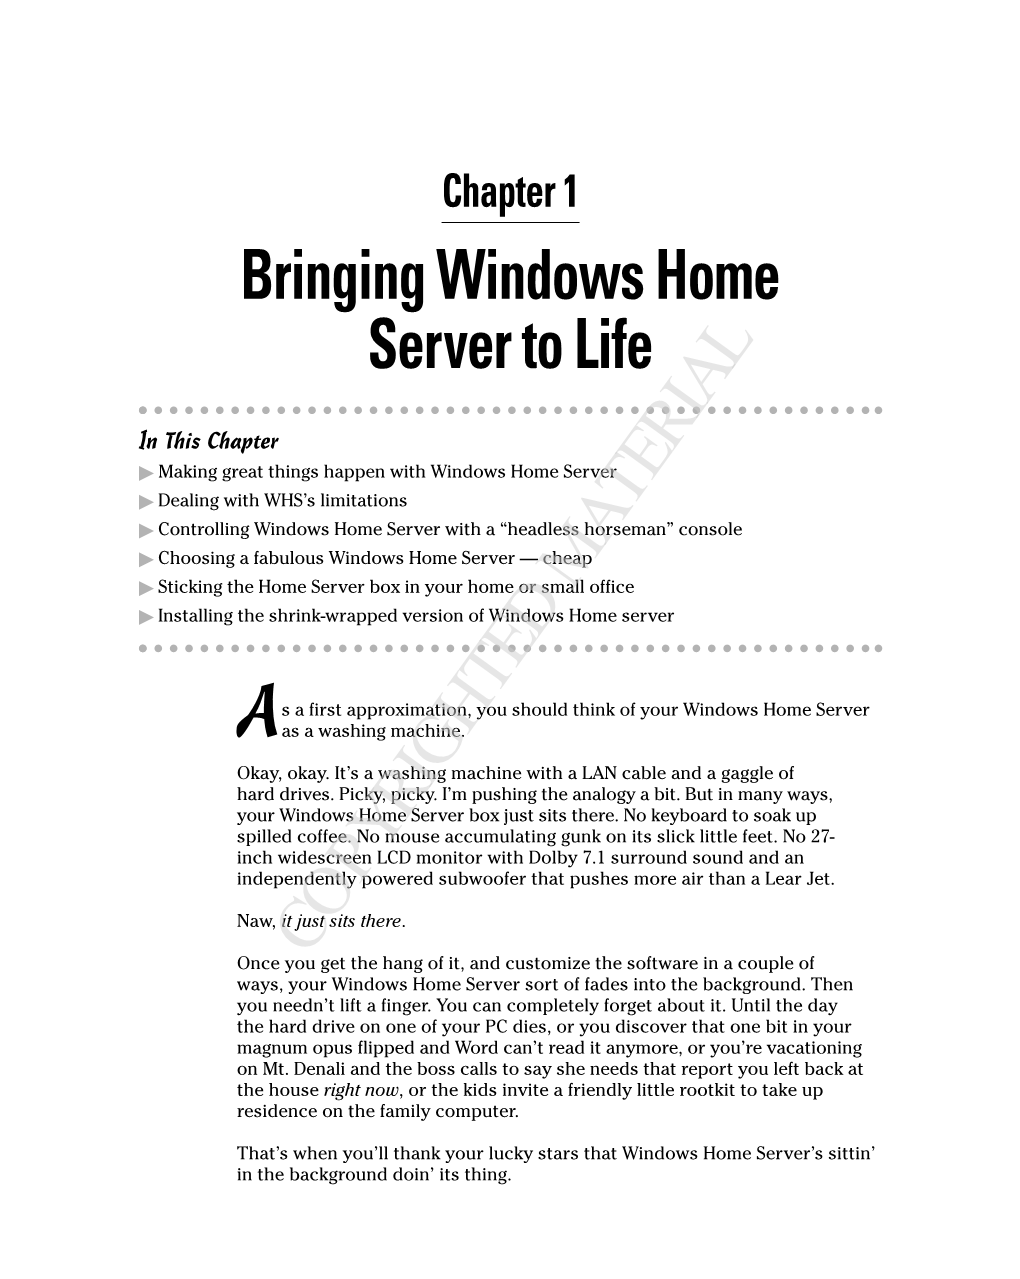 Bringing Windows Home Server to Life